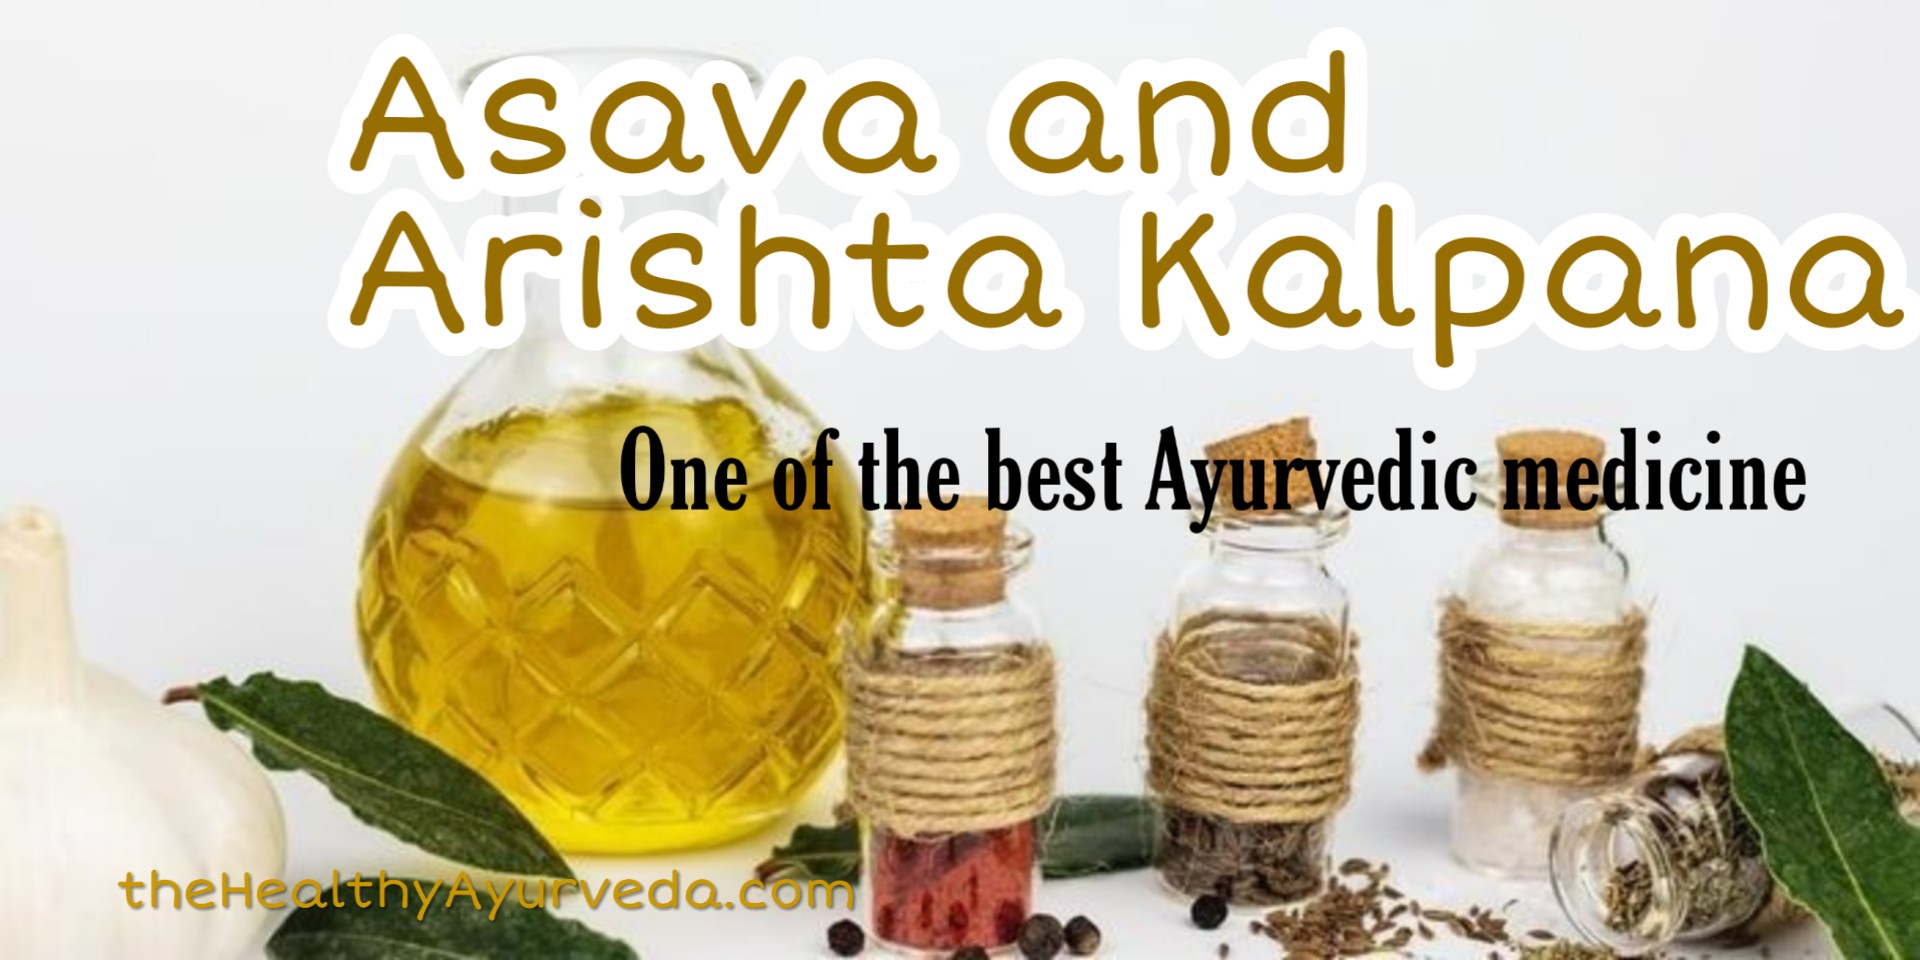 Read more about the article Asava and Arishta Kalpana